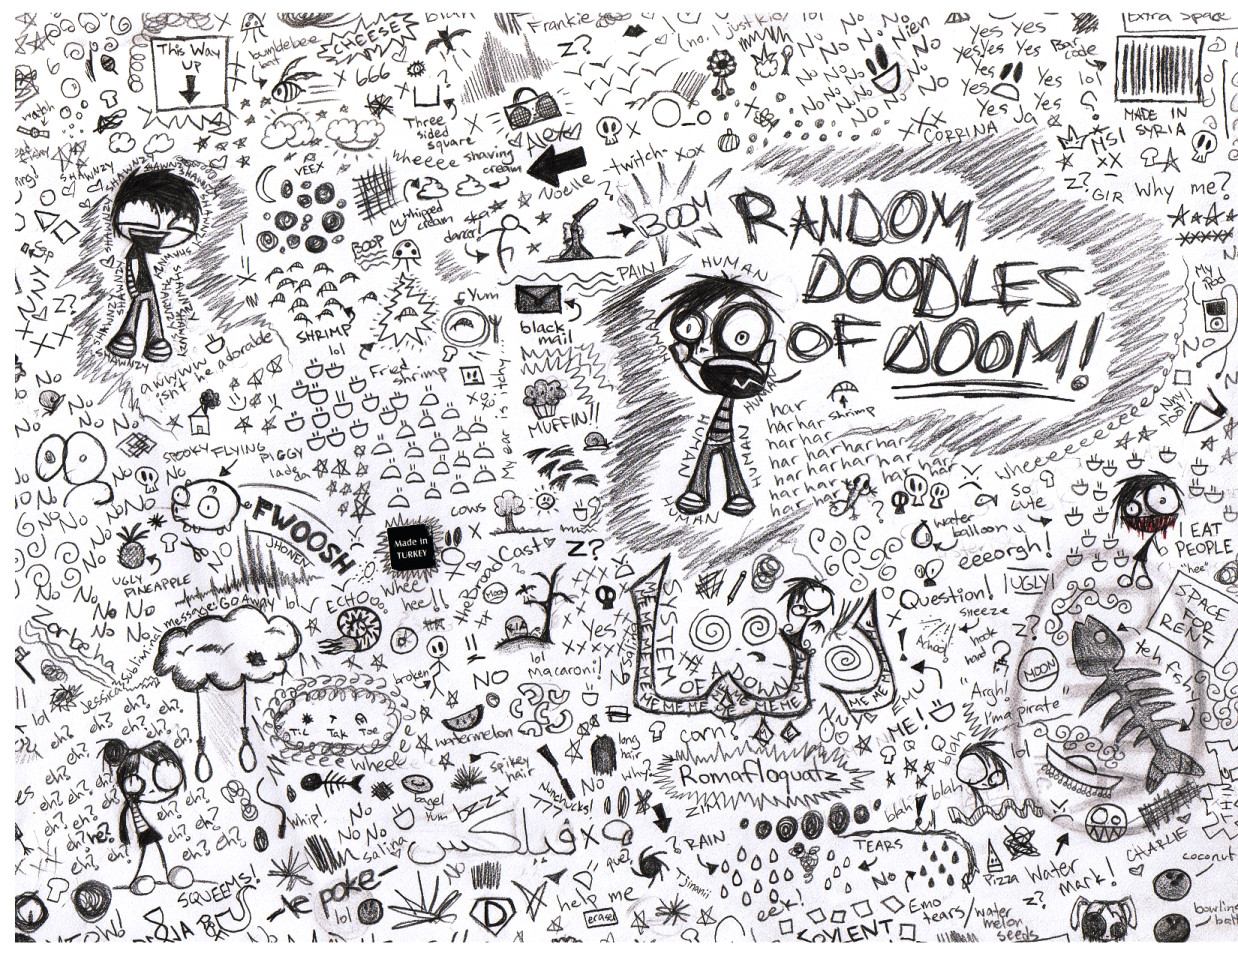 doodles_of_doom_by_xdimax